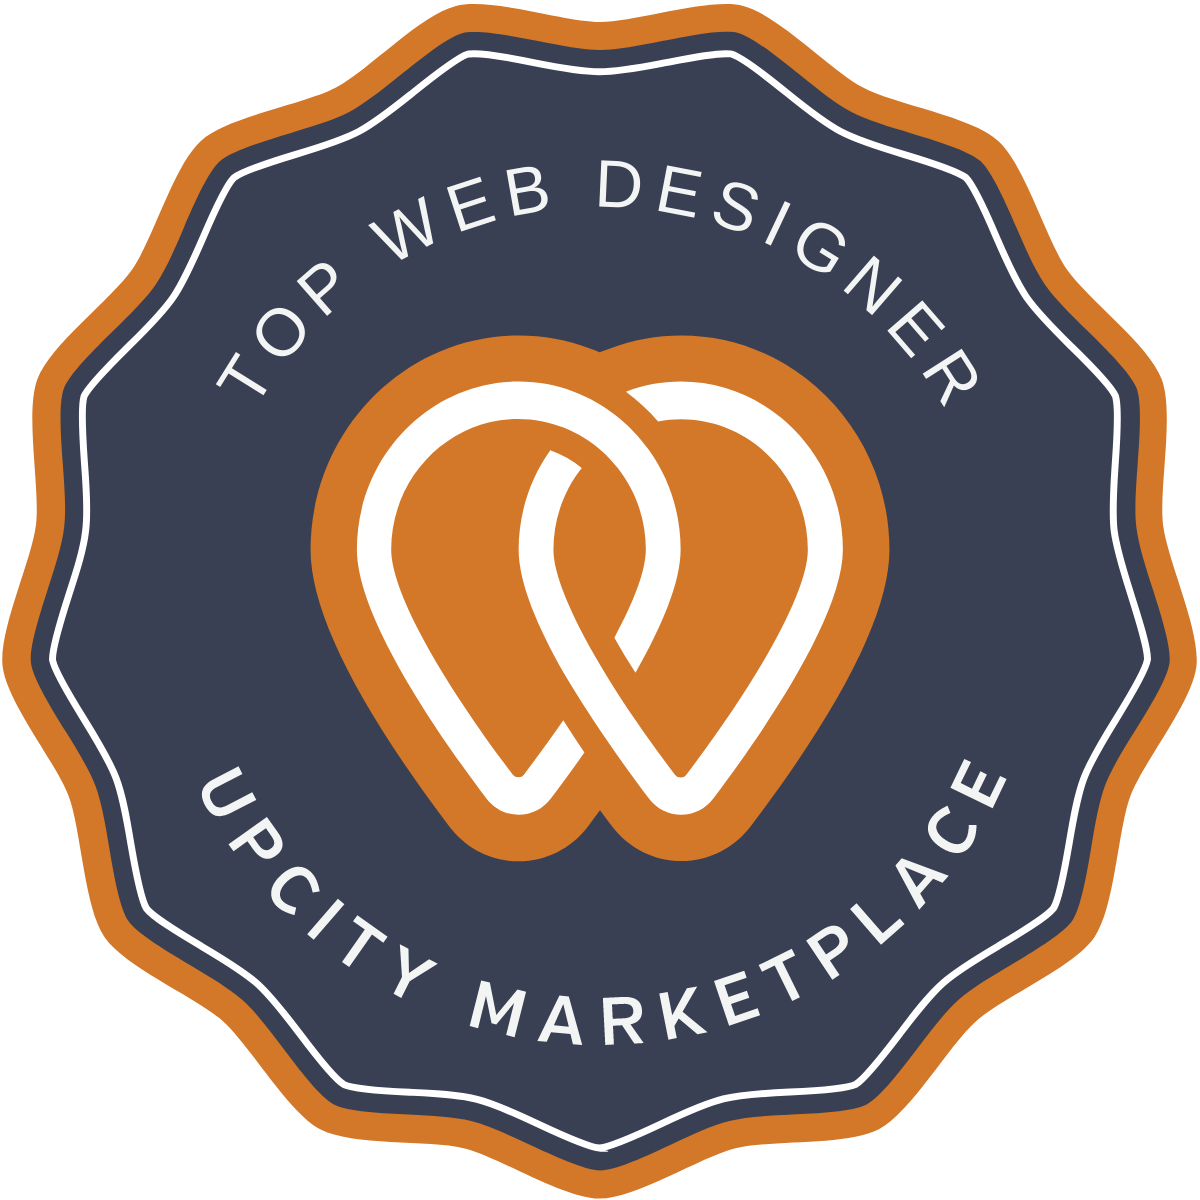 Web Designs Services